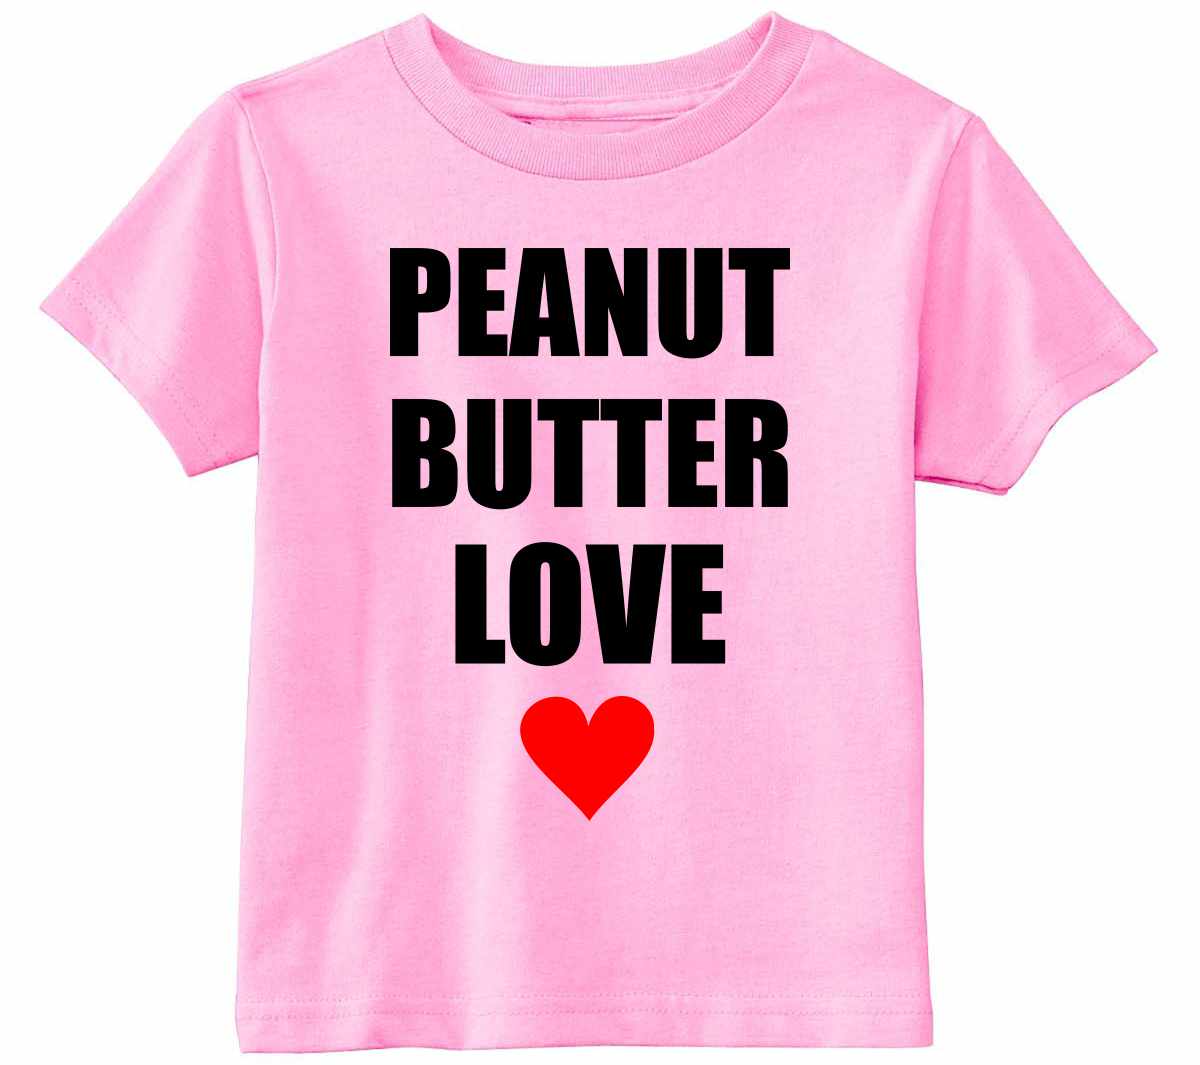 PEANUT BUTTER LOVE on Infant-Toddler T-Shirt (#698-7)